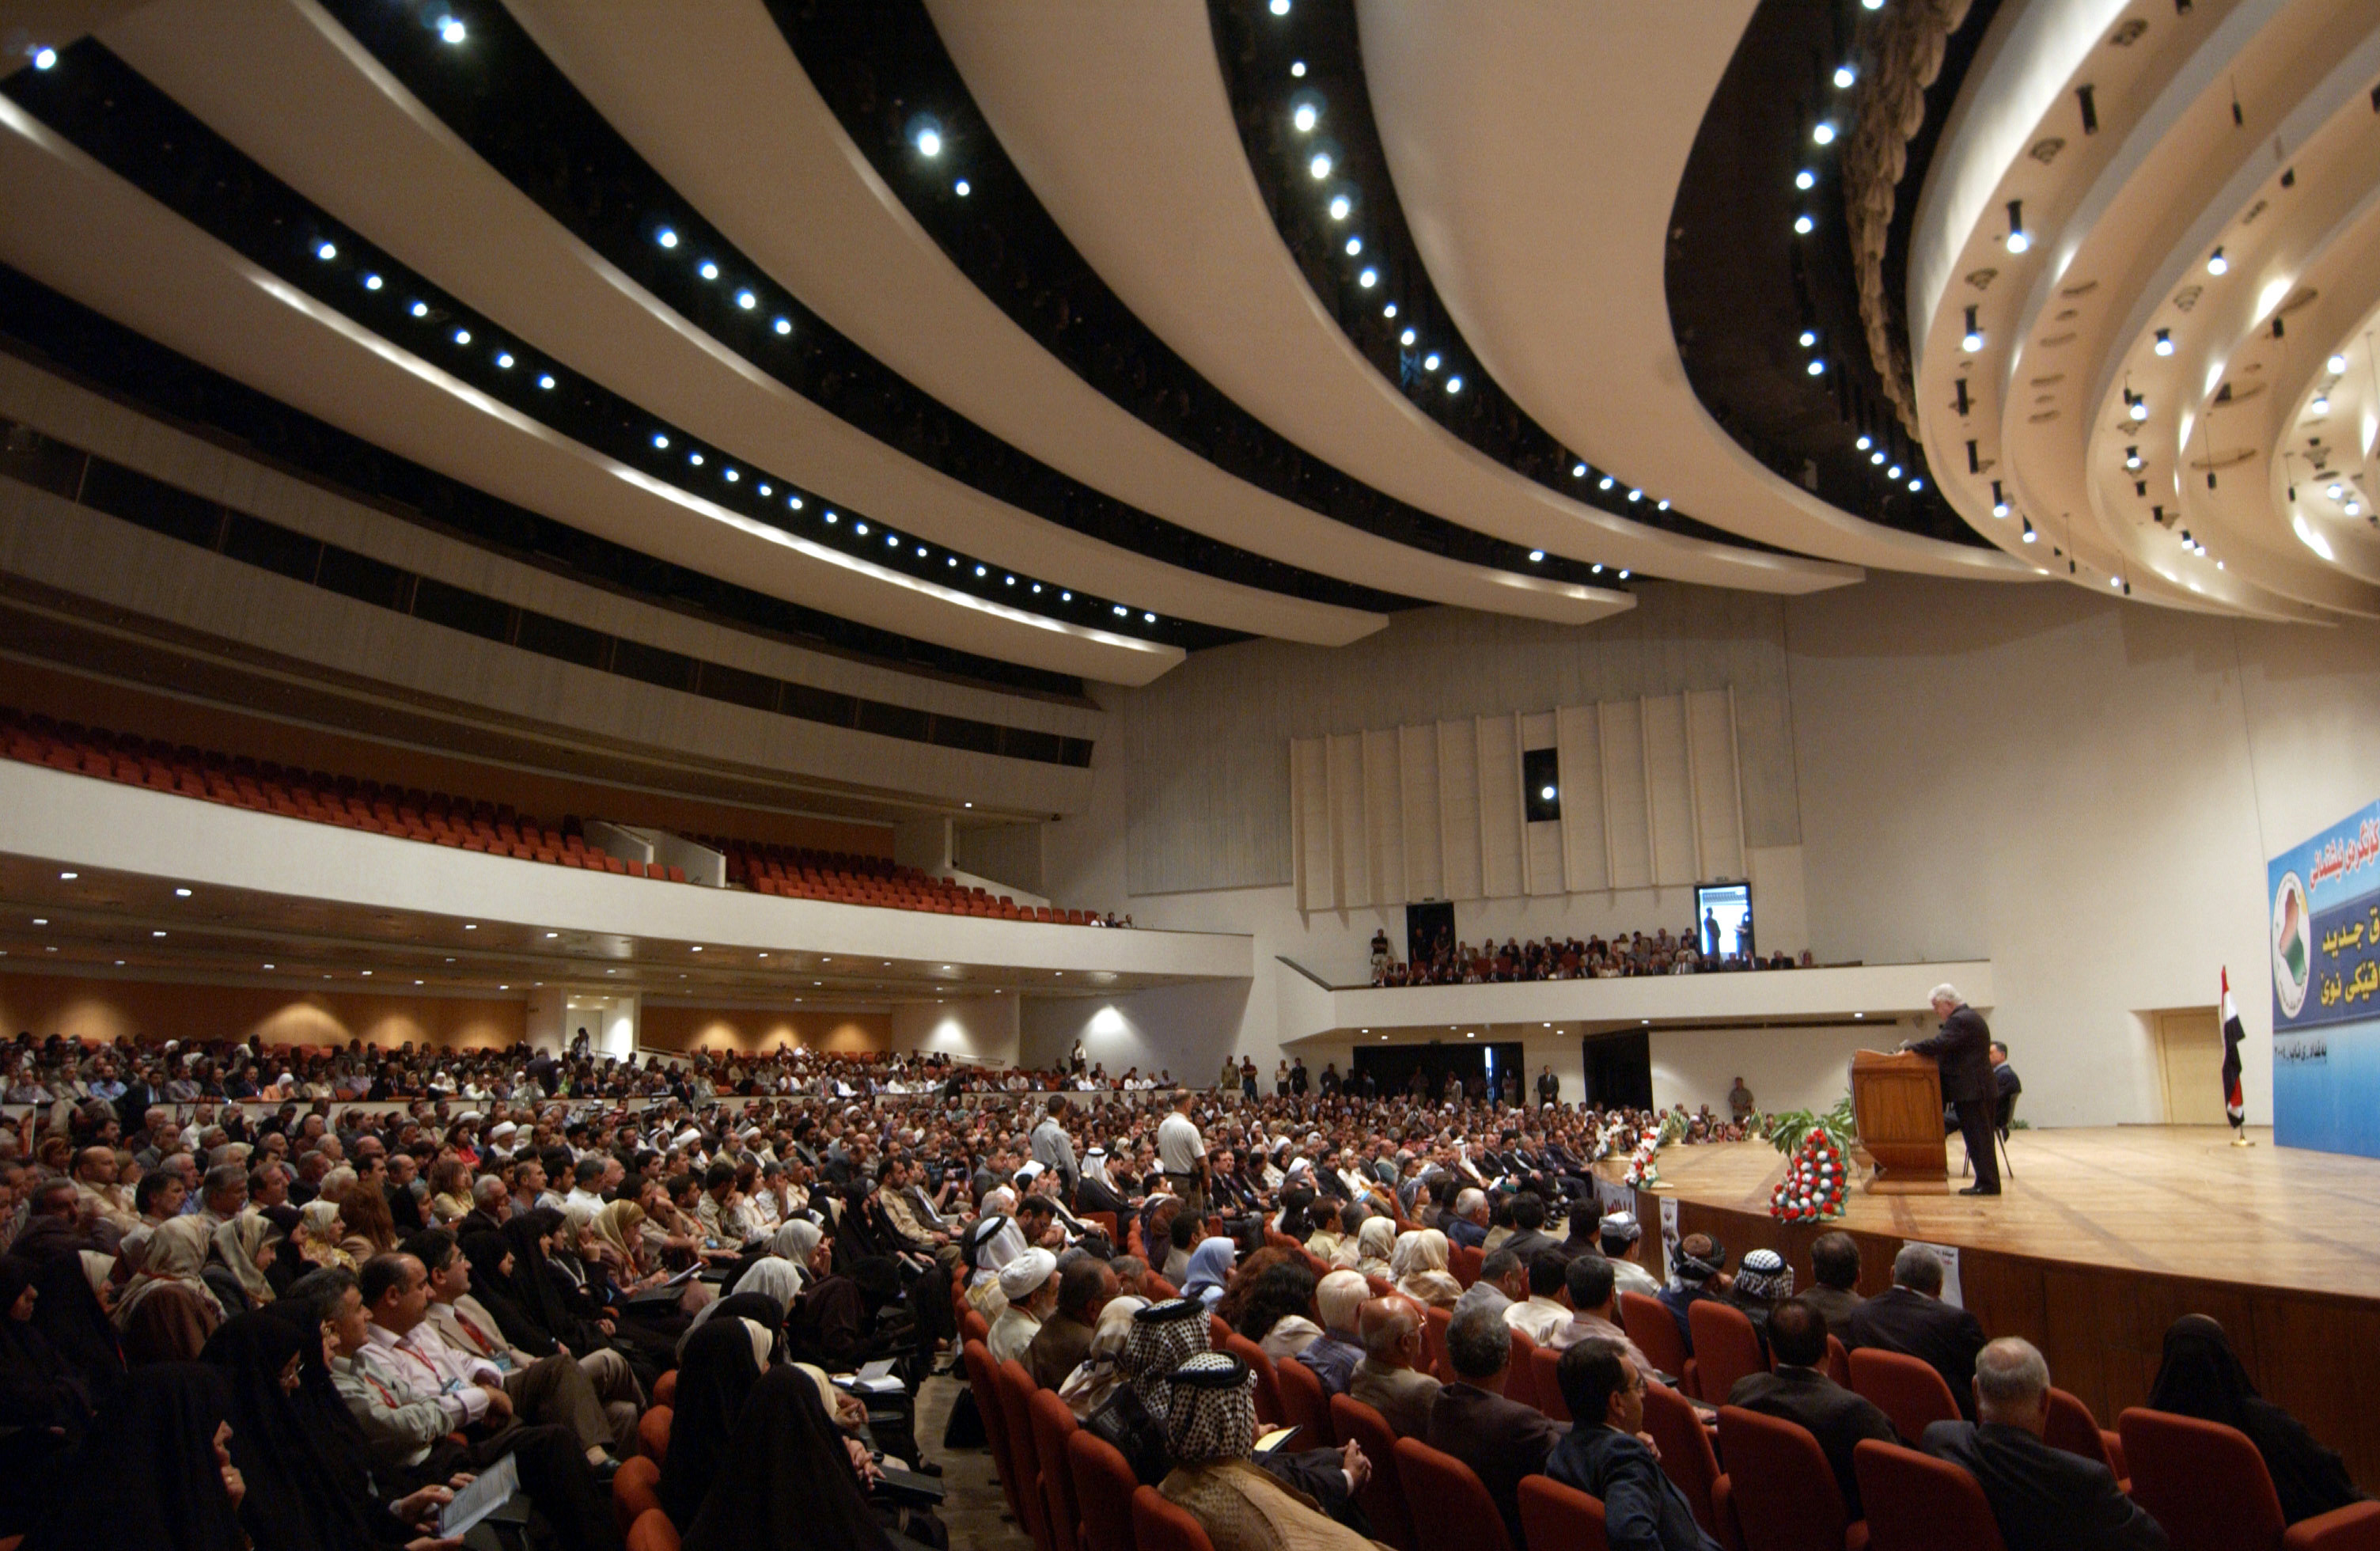 File:Baghdad Convention Center inside.jpg - Wikipedia